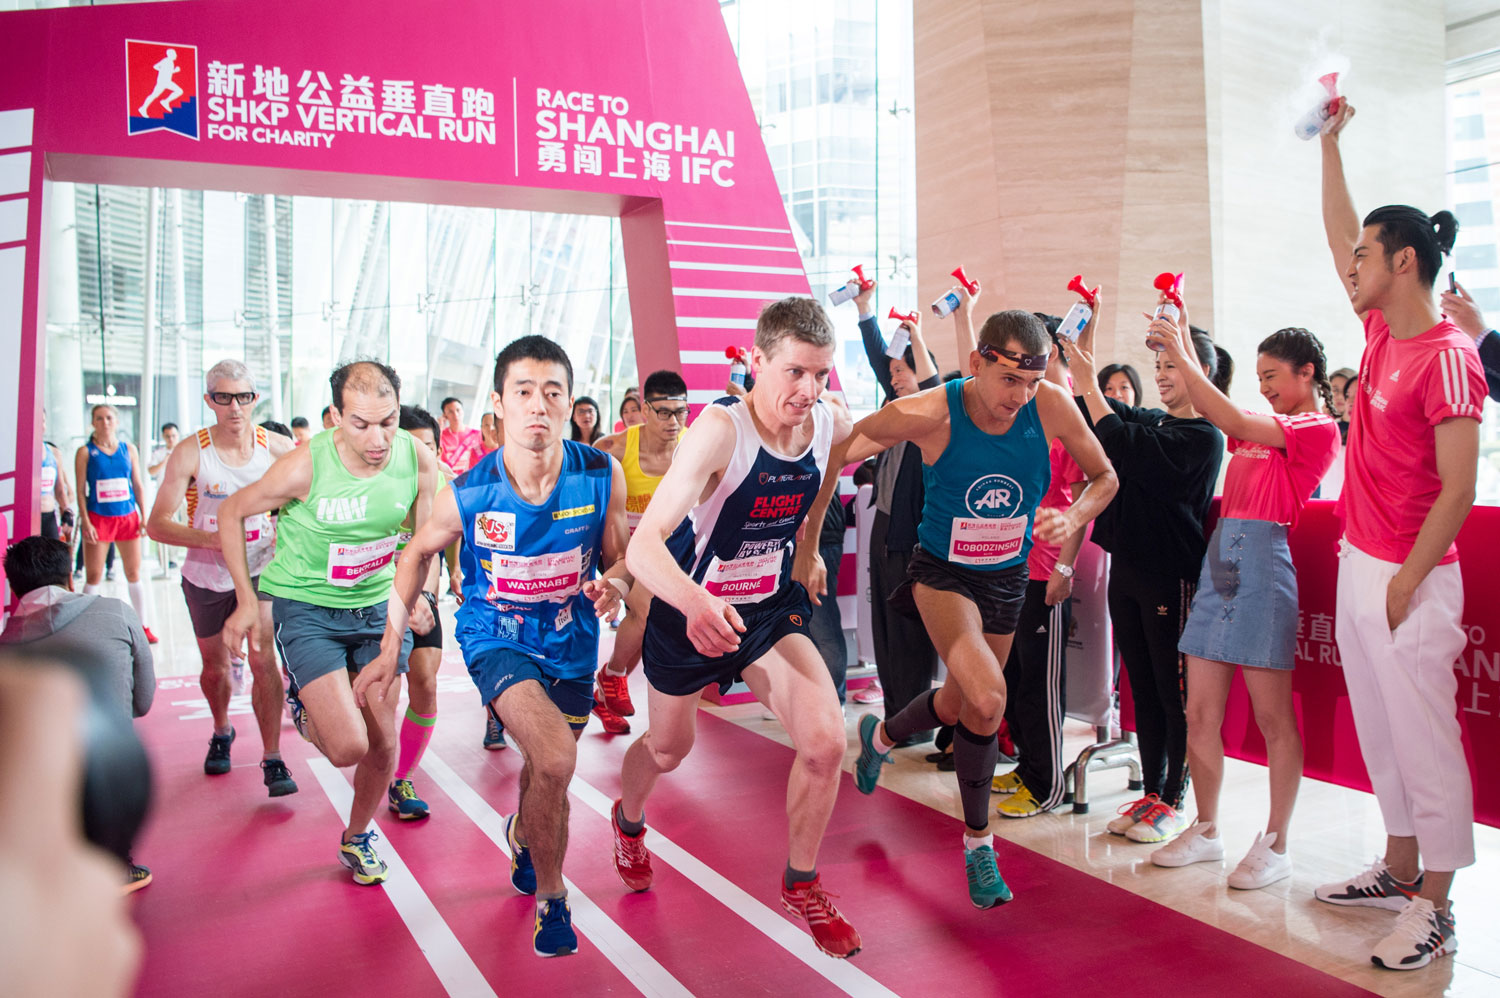 Men's start, SHKP Vertical Run for Charity: Race to Shanghai IFC. ©Sporting Republic 